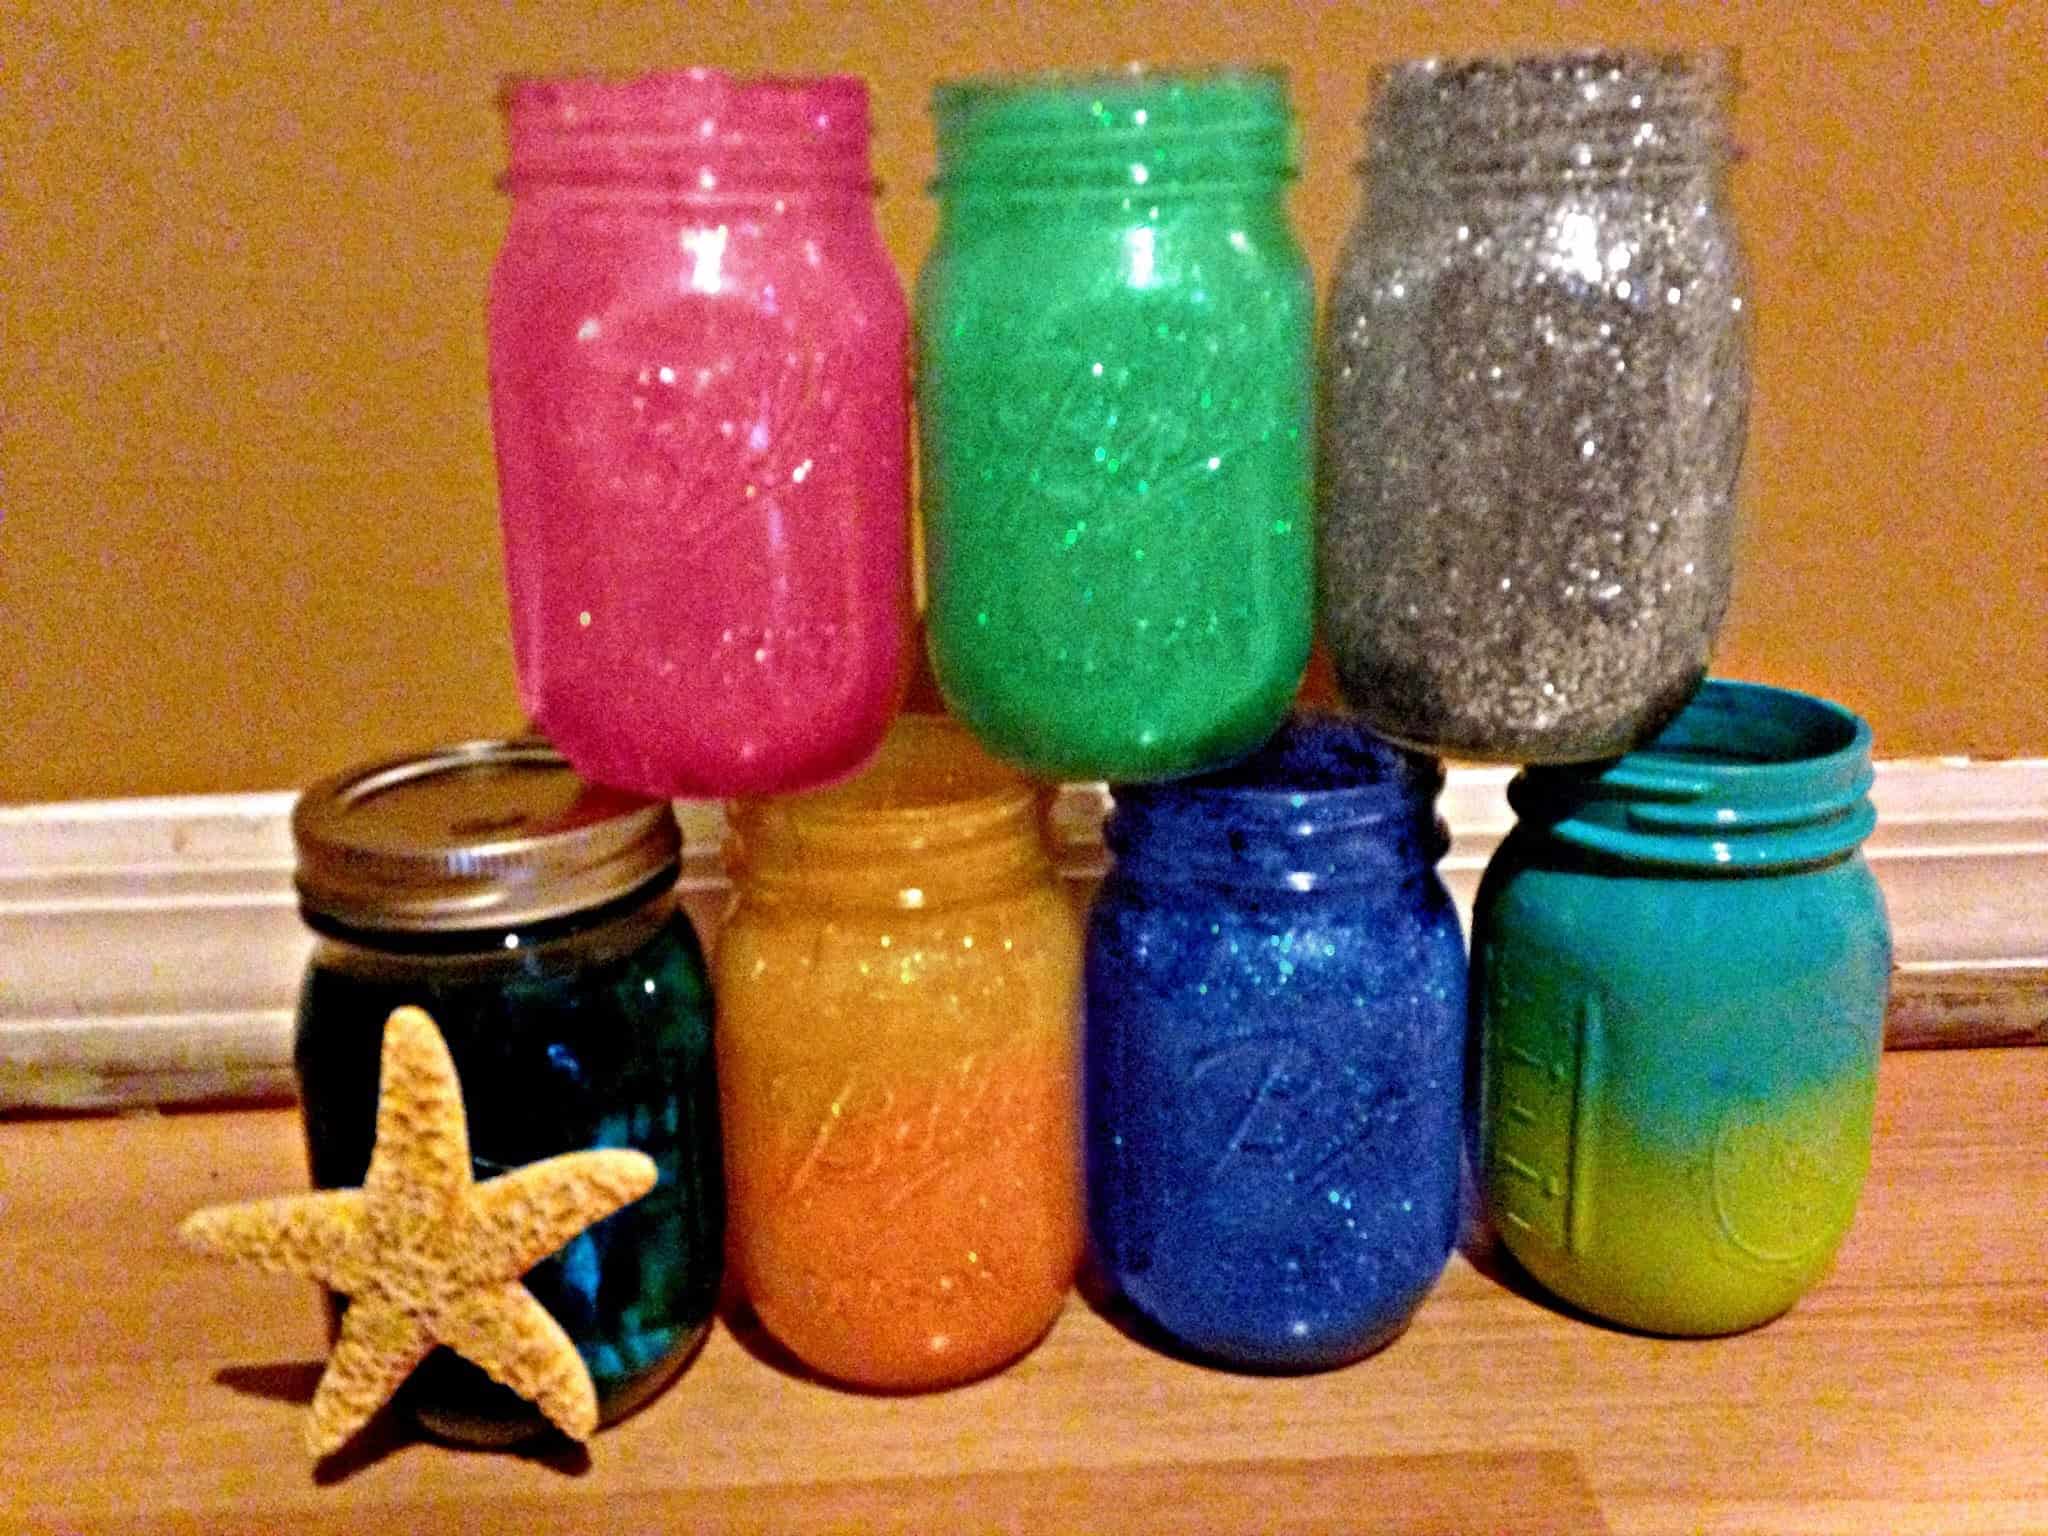 14 Great Ways to Remodel and Repurpose Mason Jars